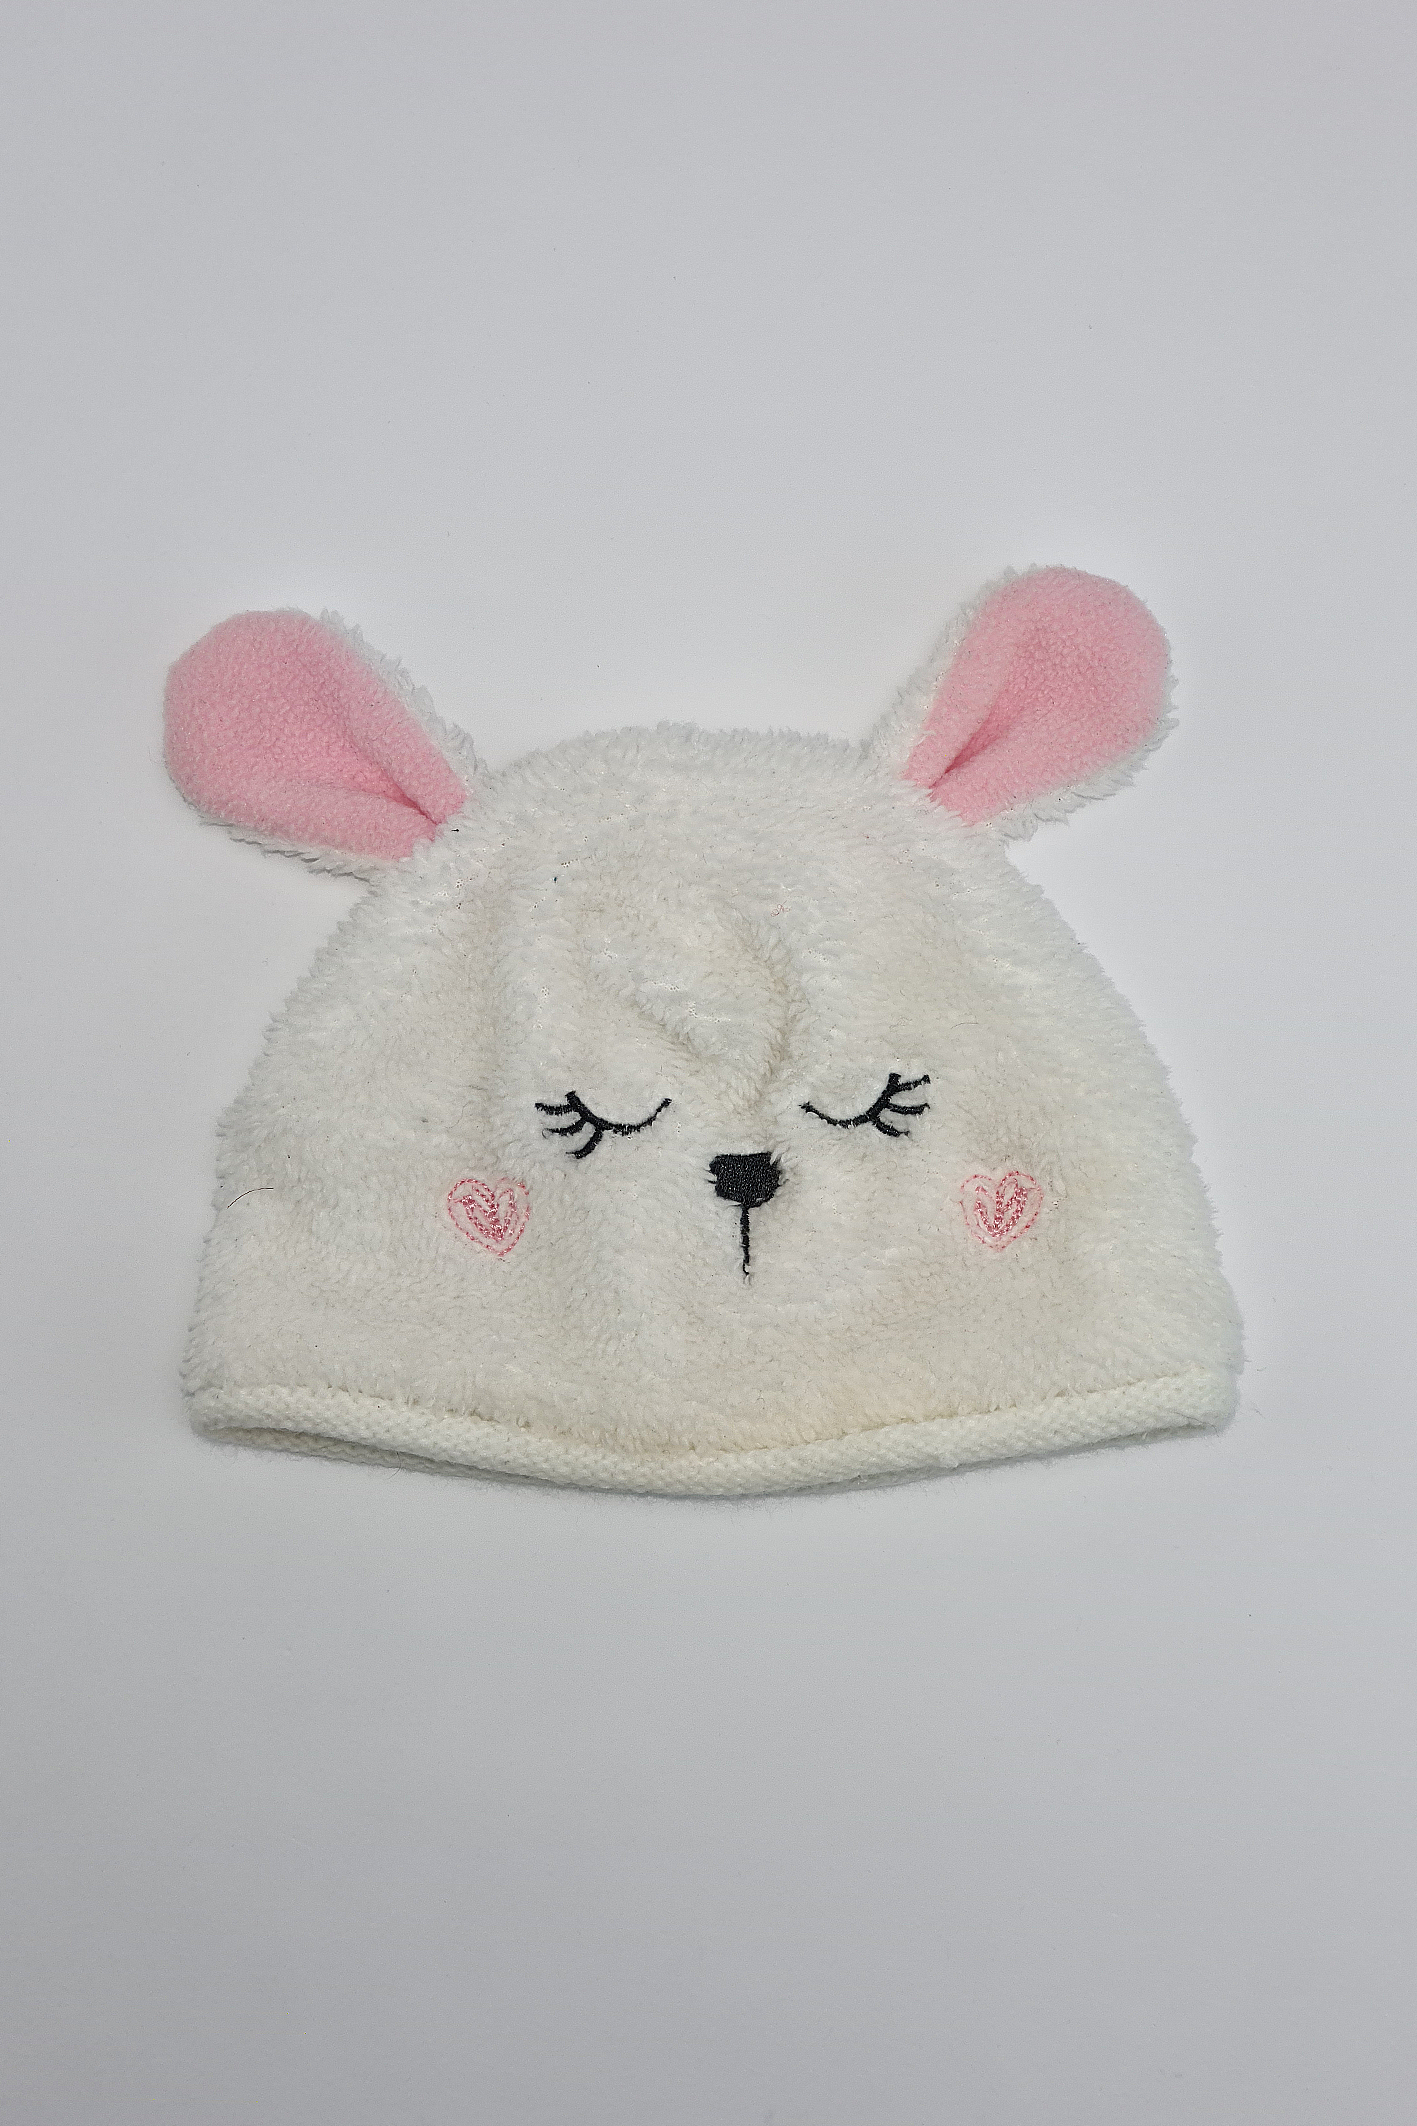 Newborn - Bunny Hat - Precuddled.com